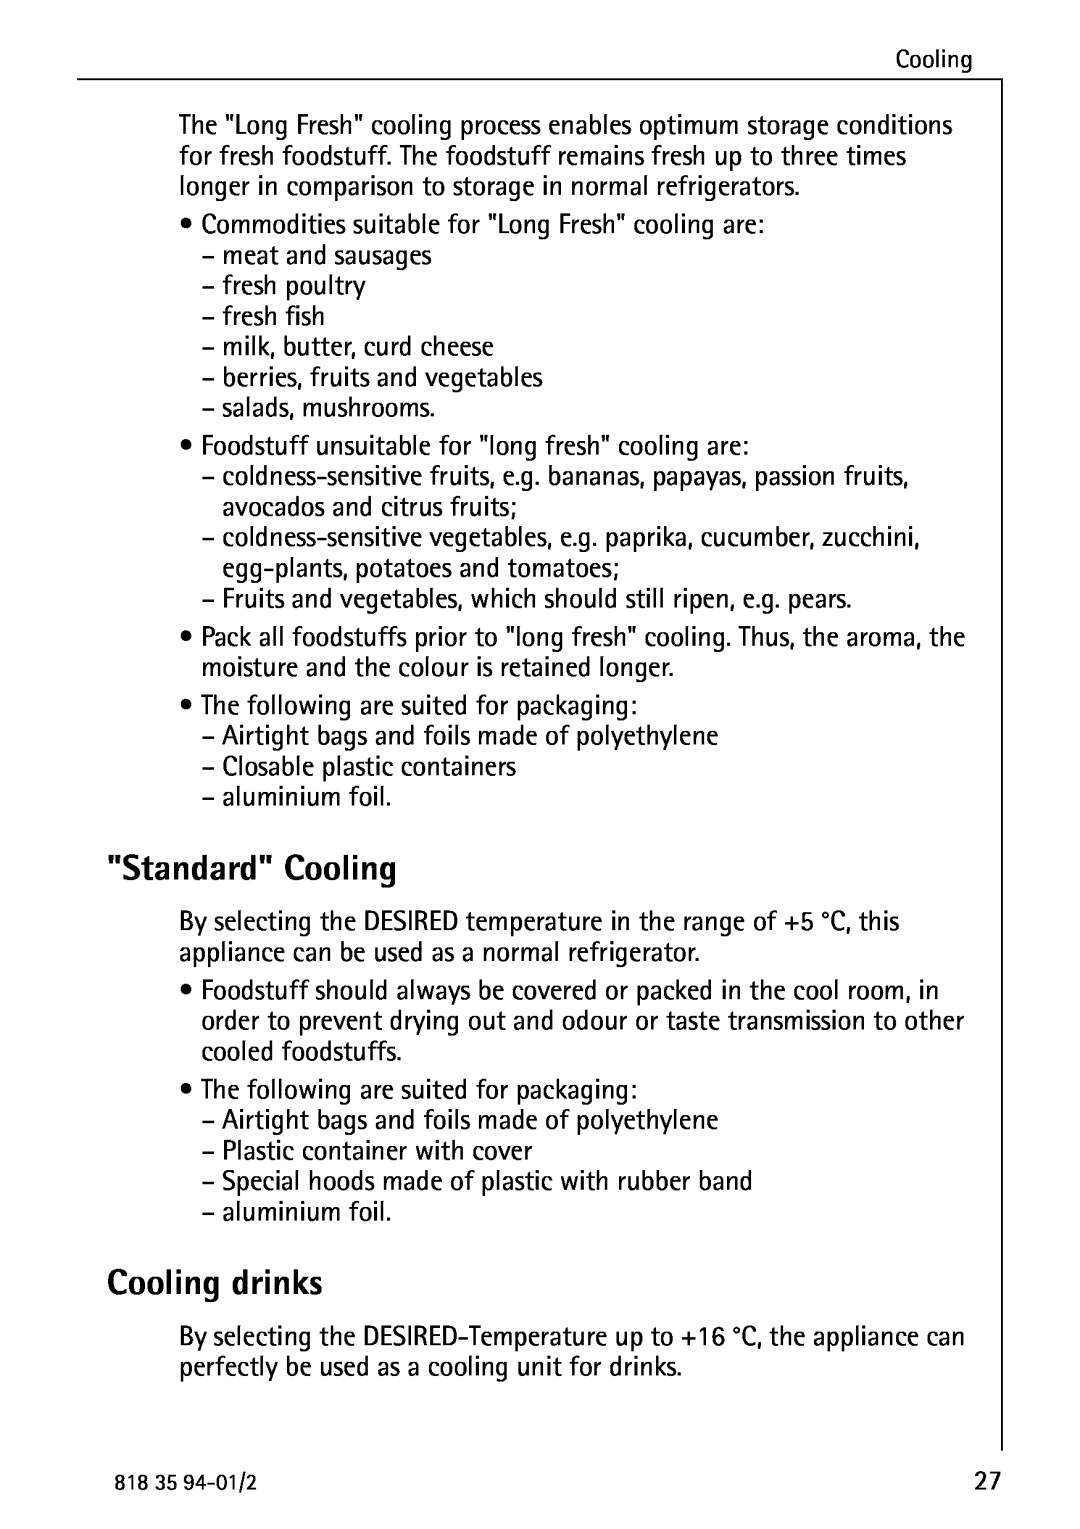 Electrolux U31462 operating instructions Standard Cooling, Cooling drinks 